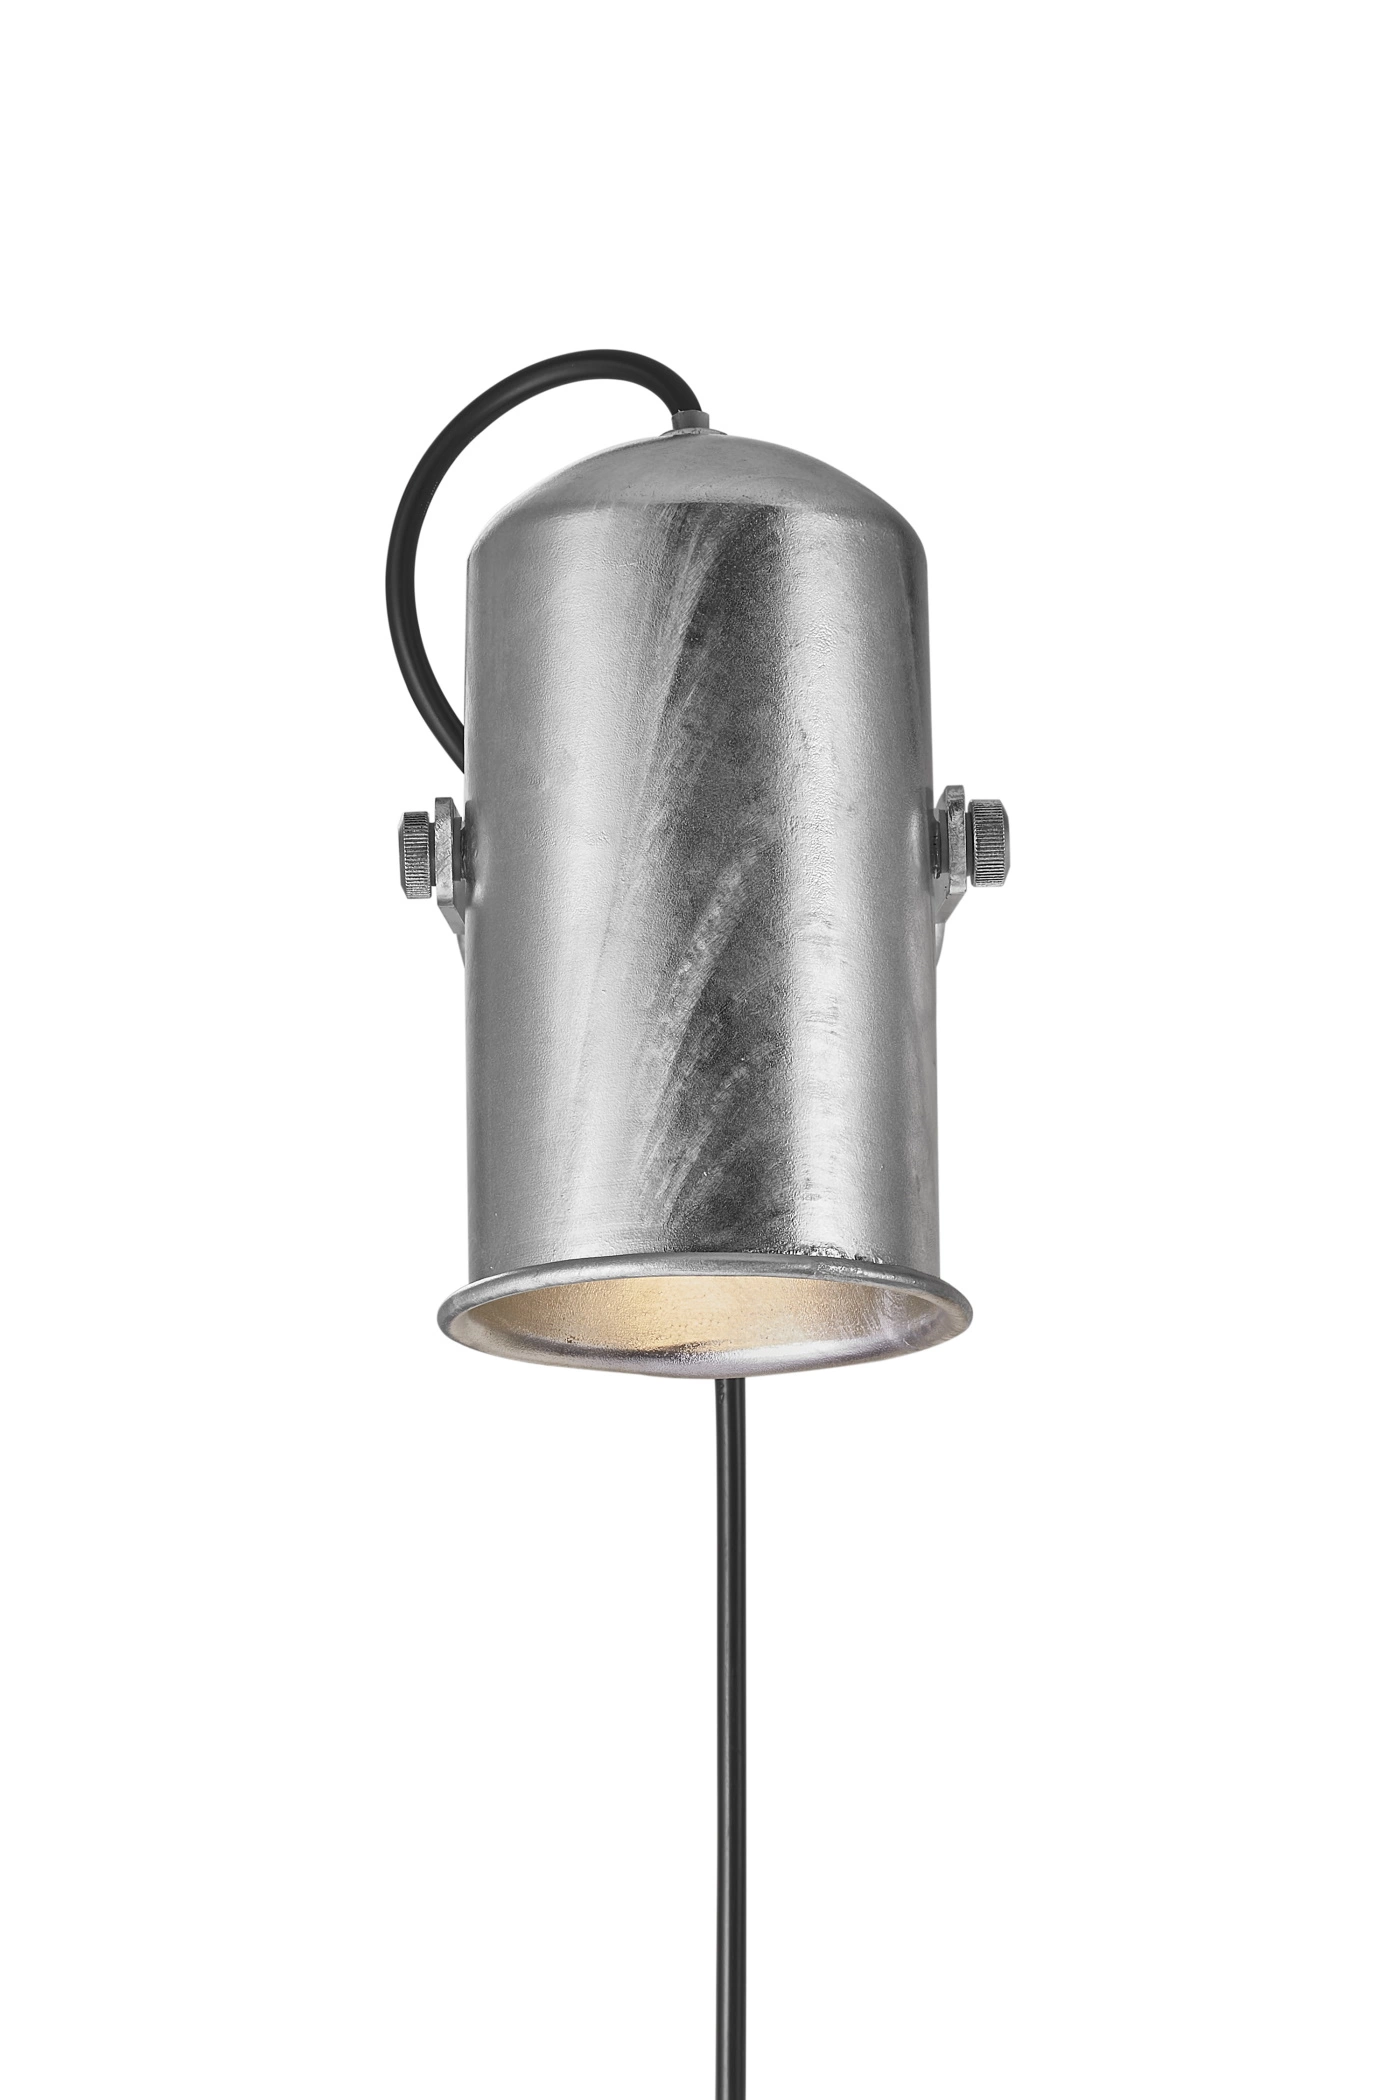   
                        
                        Бра NORDLUX (Дания) 52470    
                         в стиле Лофт.  
                        Тип источника света: светодиодная лампа, сменная.                                                 Цвета плафонов и подвесок: Серый.                         Материал: Металл.                          фото 1